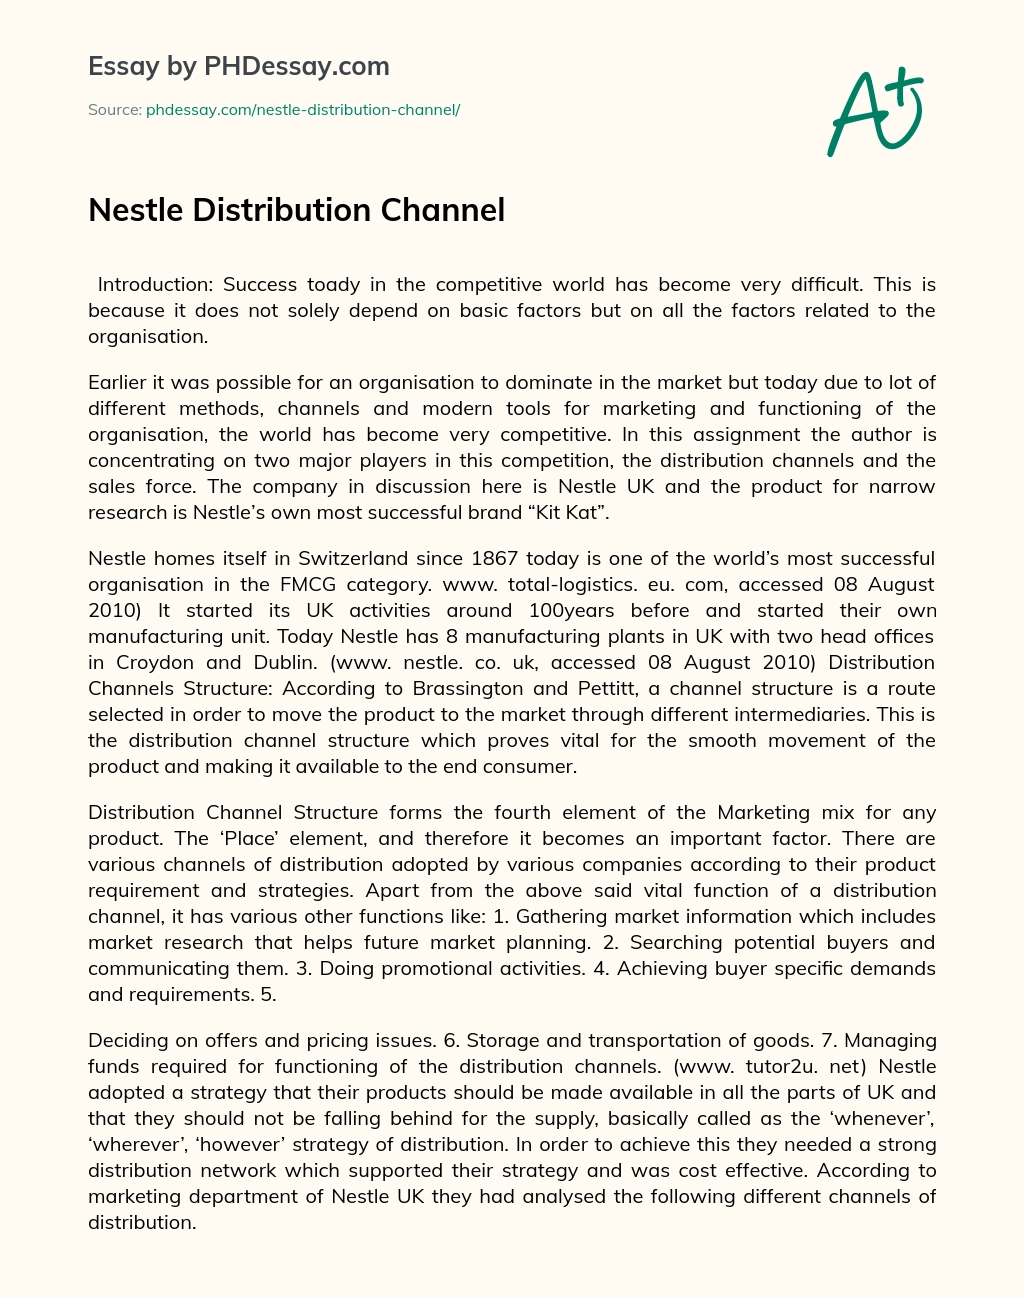 Nestle Distribution Channel essay